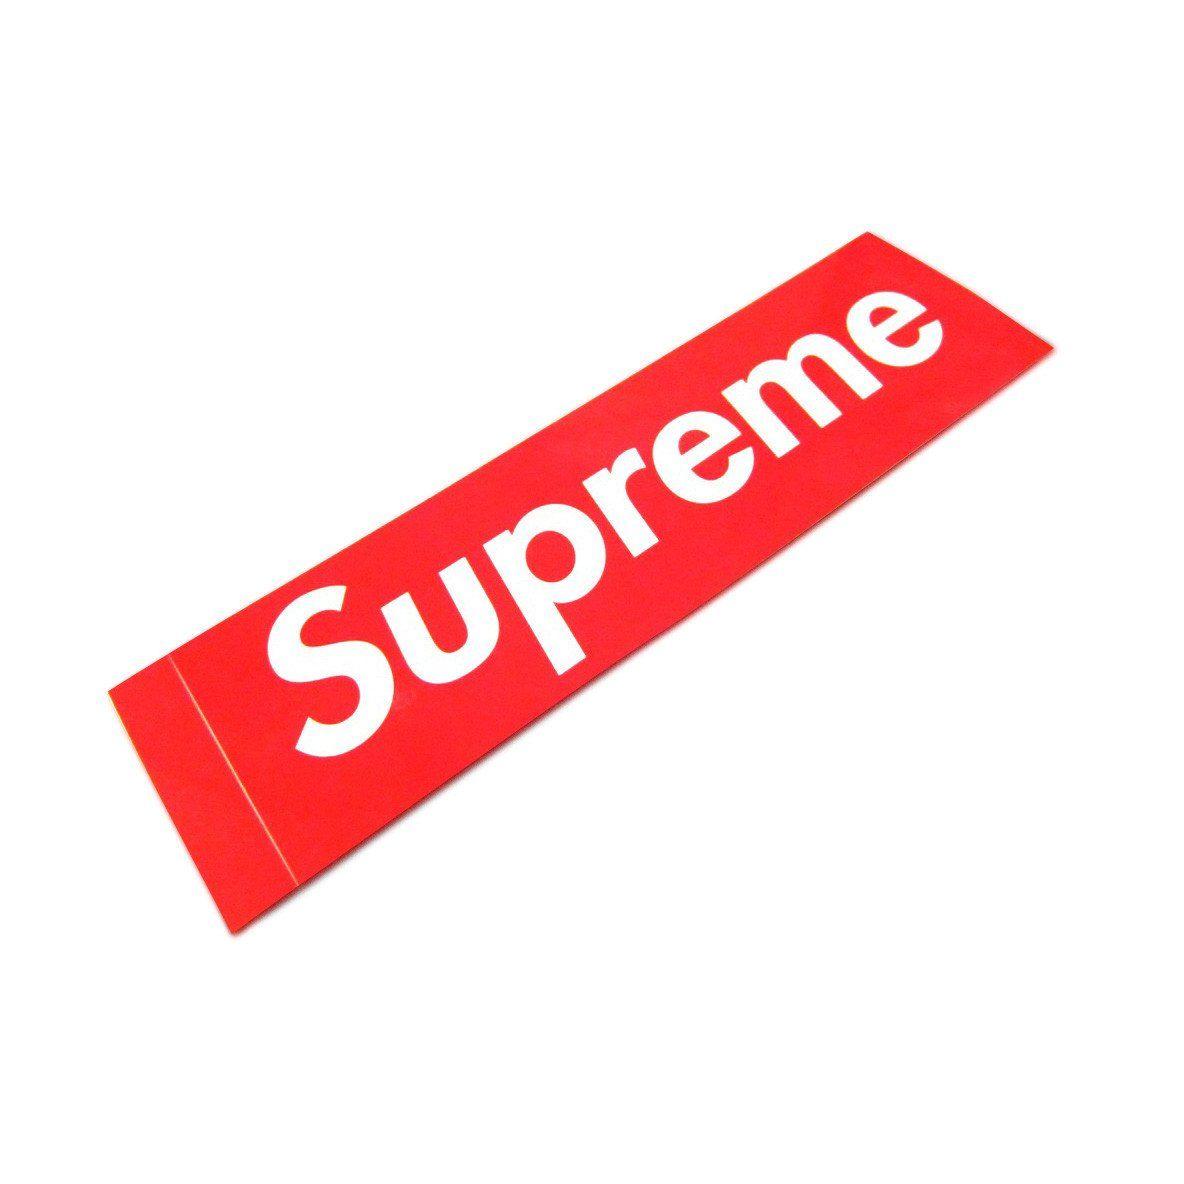 Open Red Box Logo - Supreme Box Logo Sticker – Streetwear Official